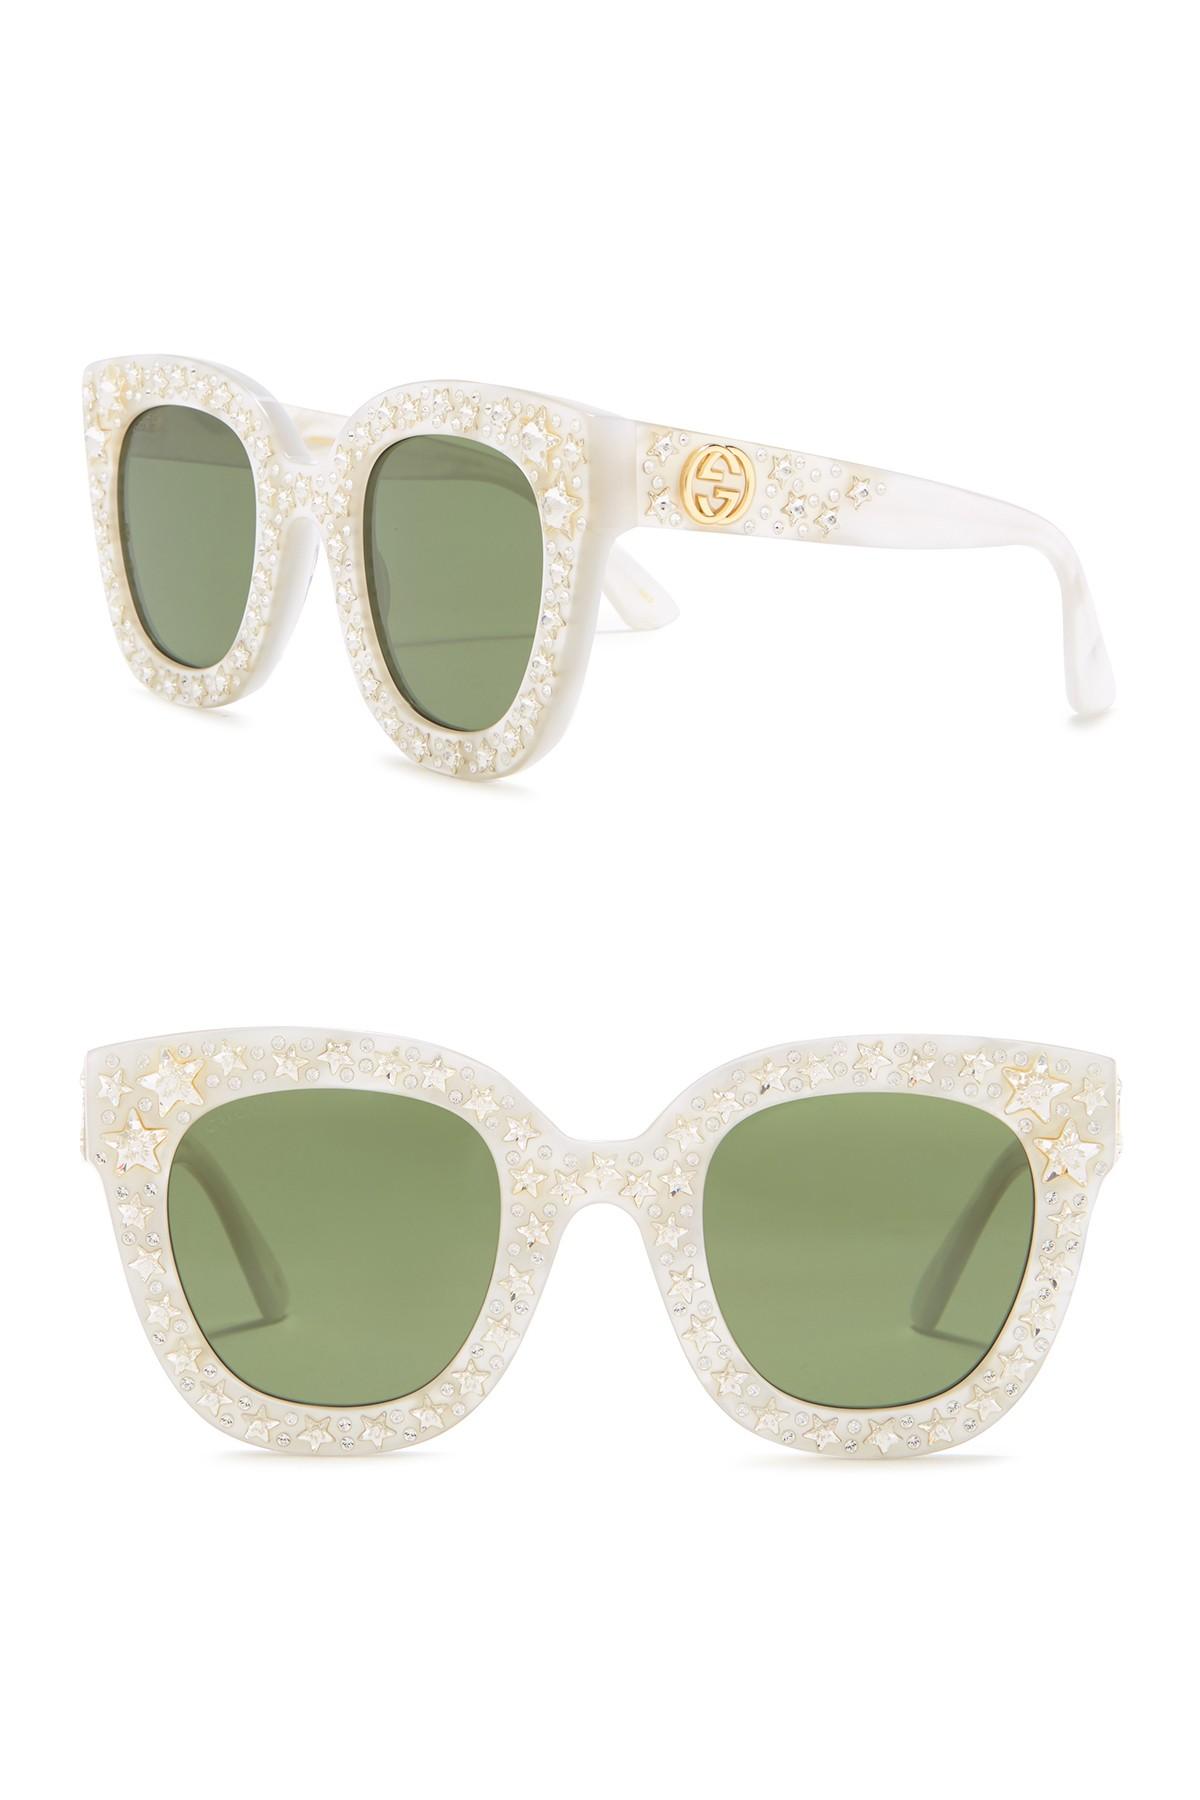 Gucci 49mm Crystal Star Sunglasses in | Lyst